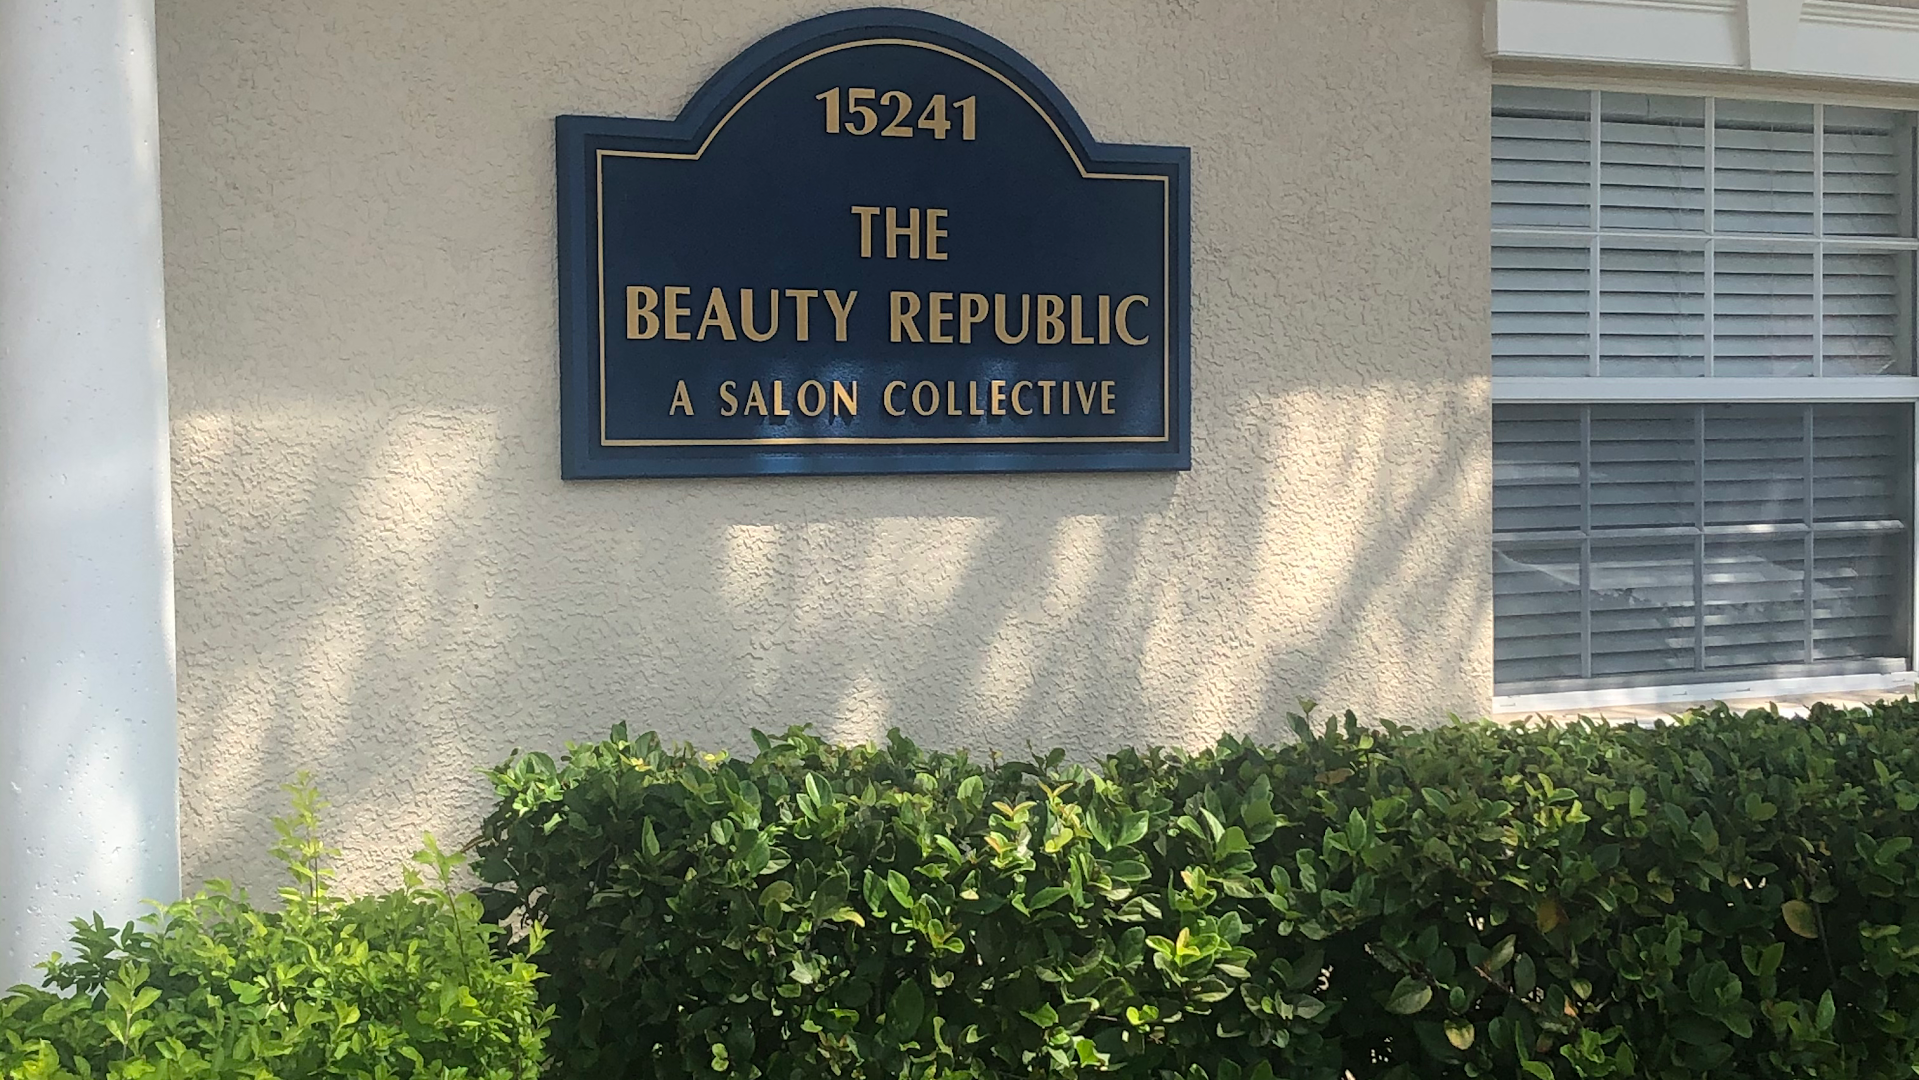 The Beauty Republic - A Salon Collective